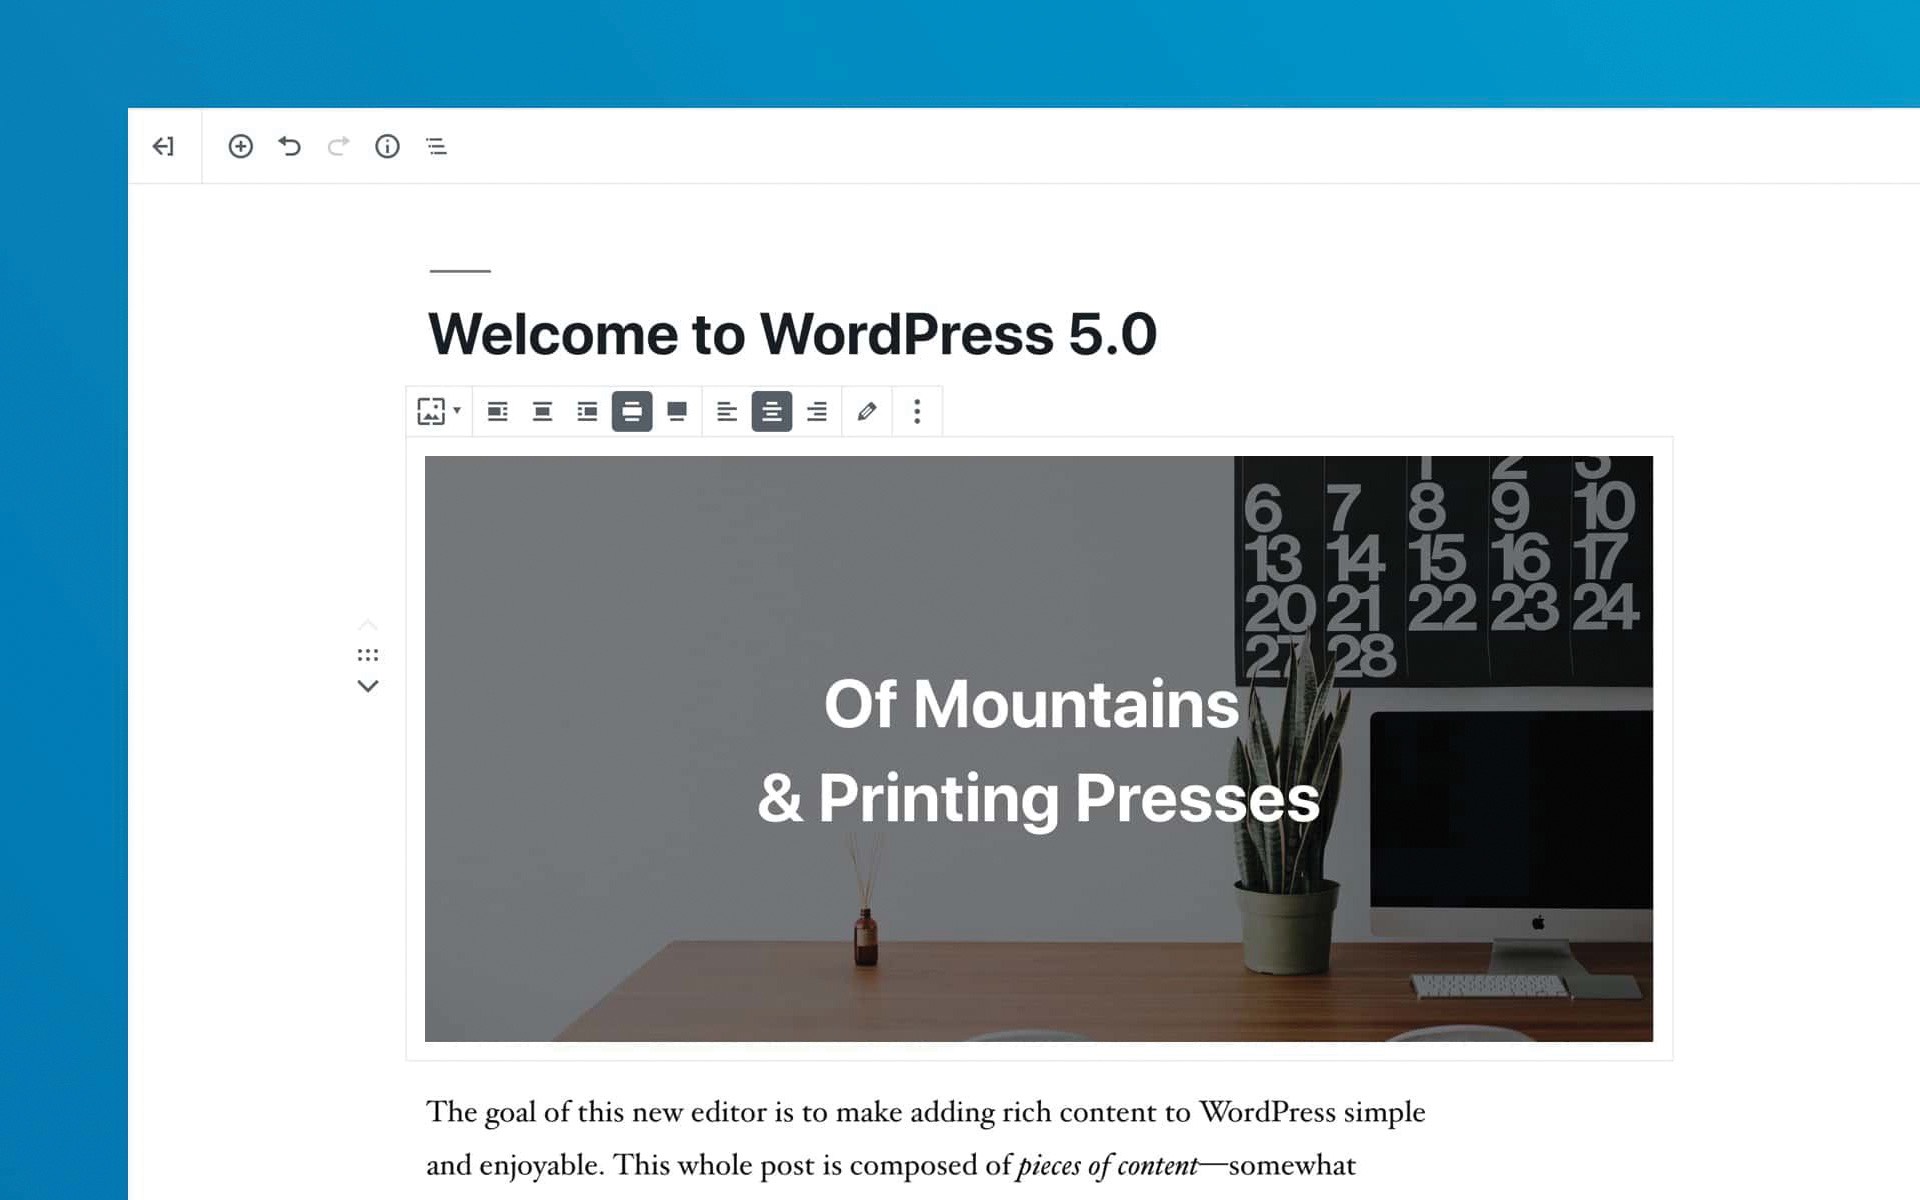 WordPress 5